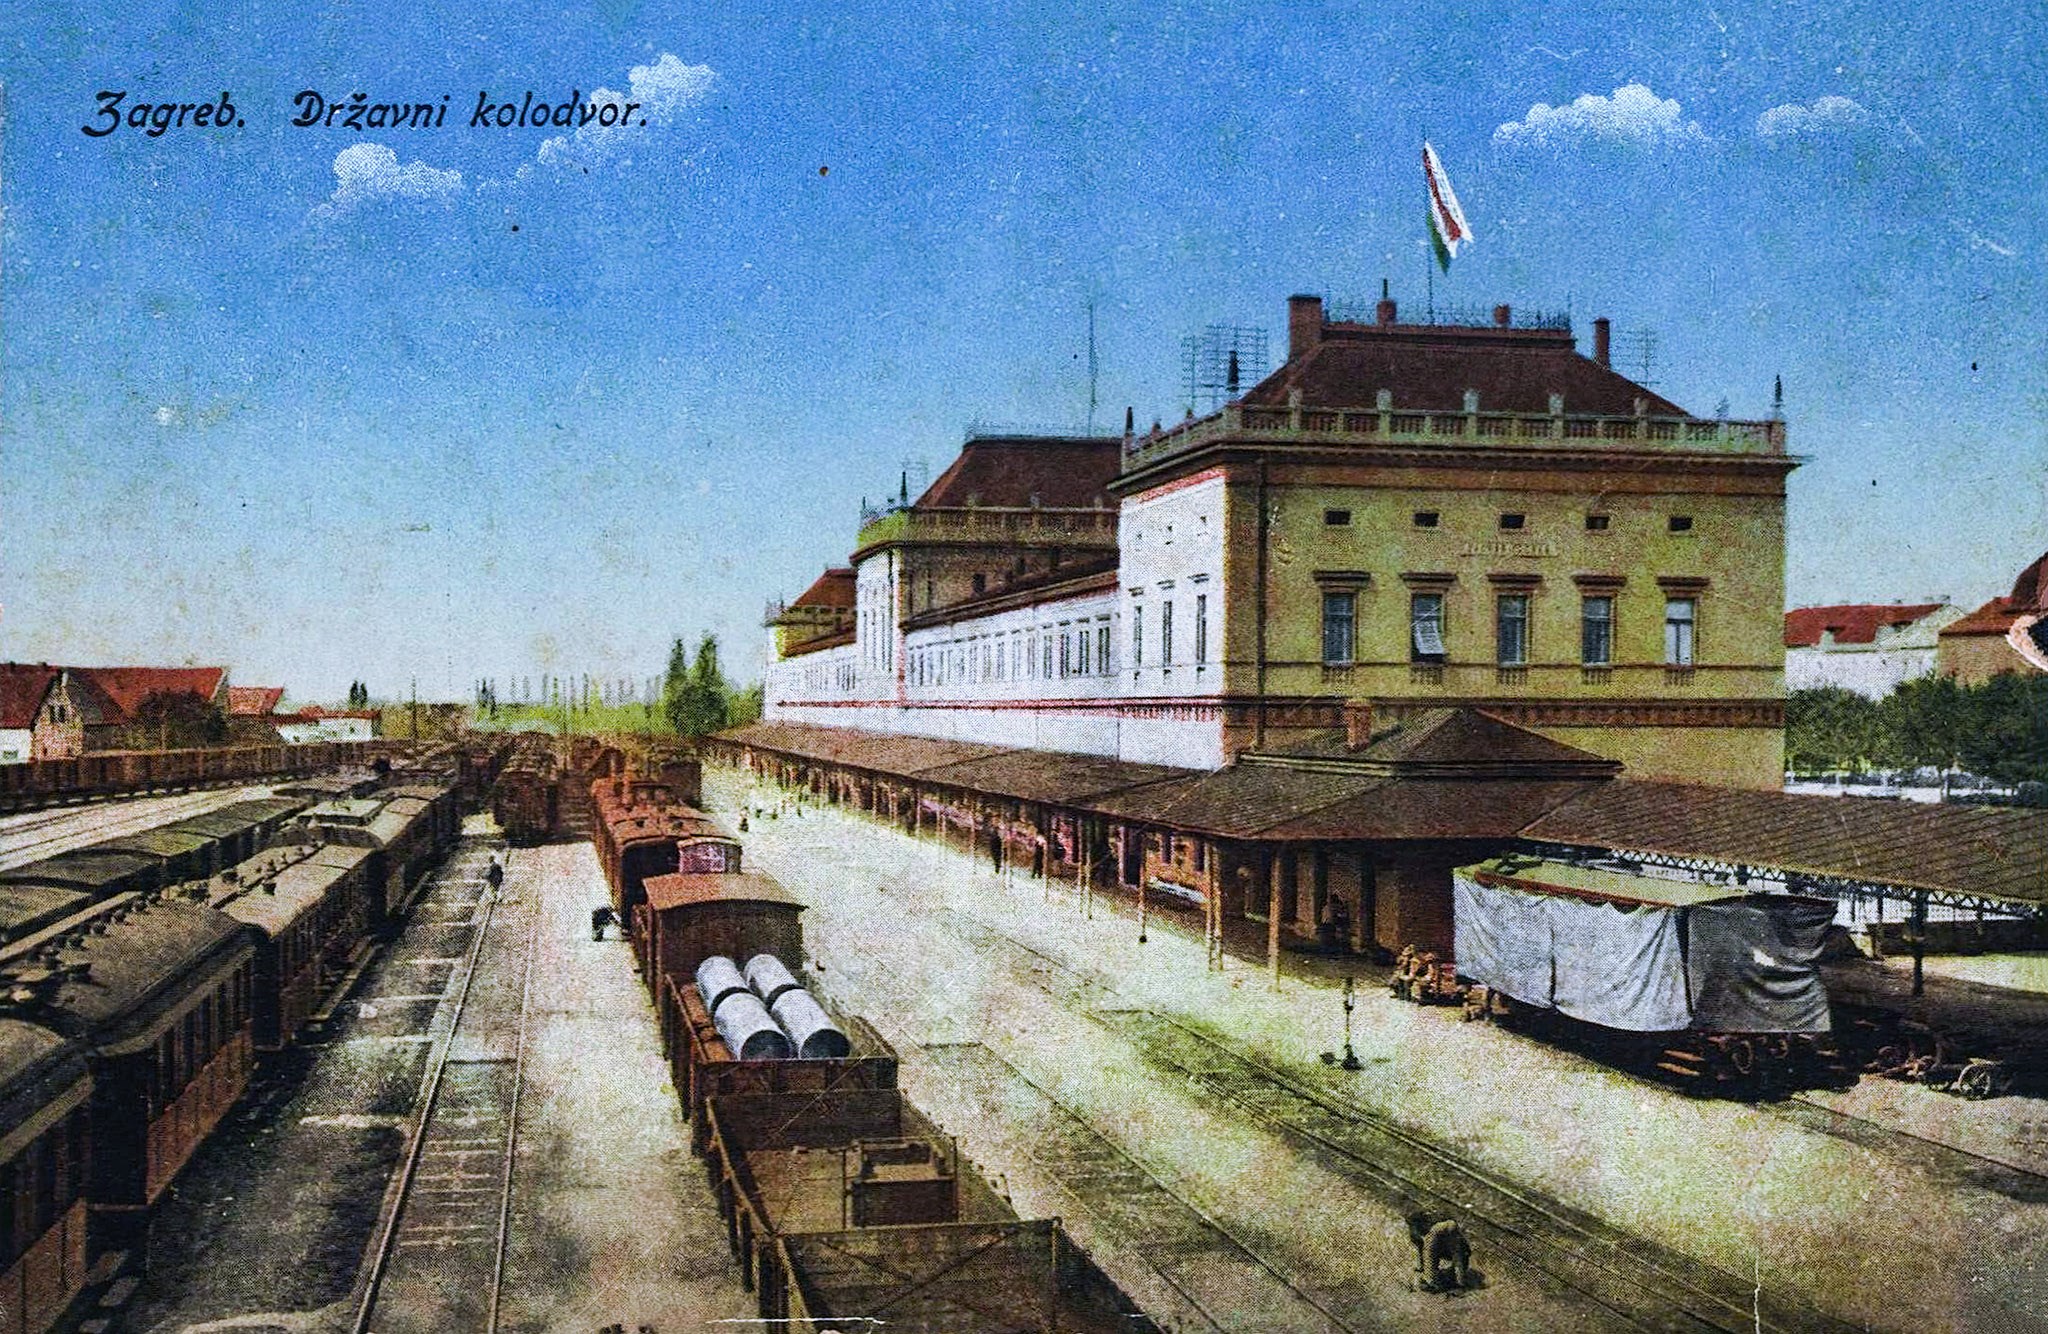 Glavni kolodvor razglednica 1918. godina.jpg